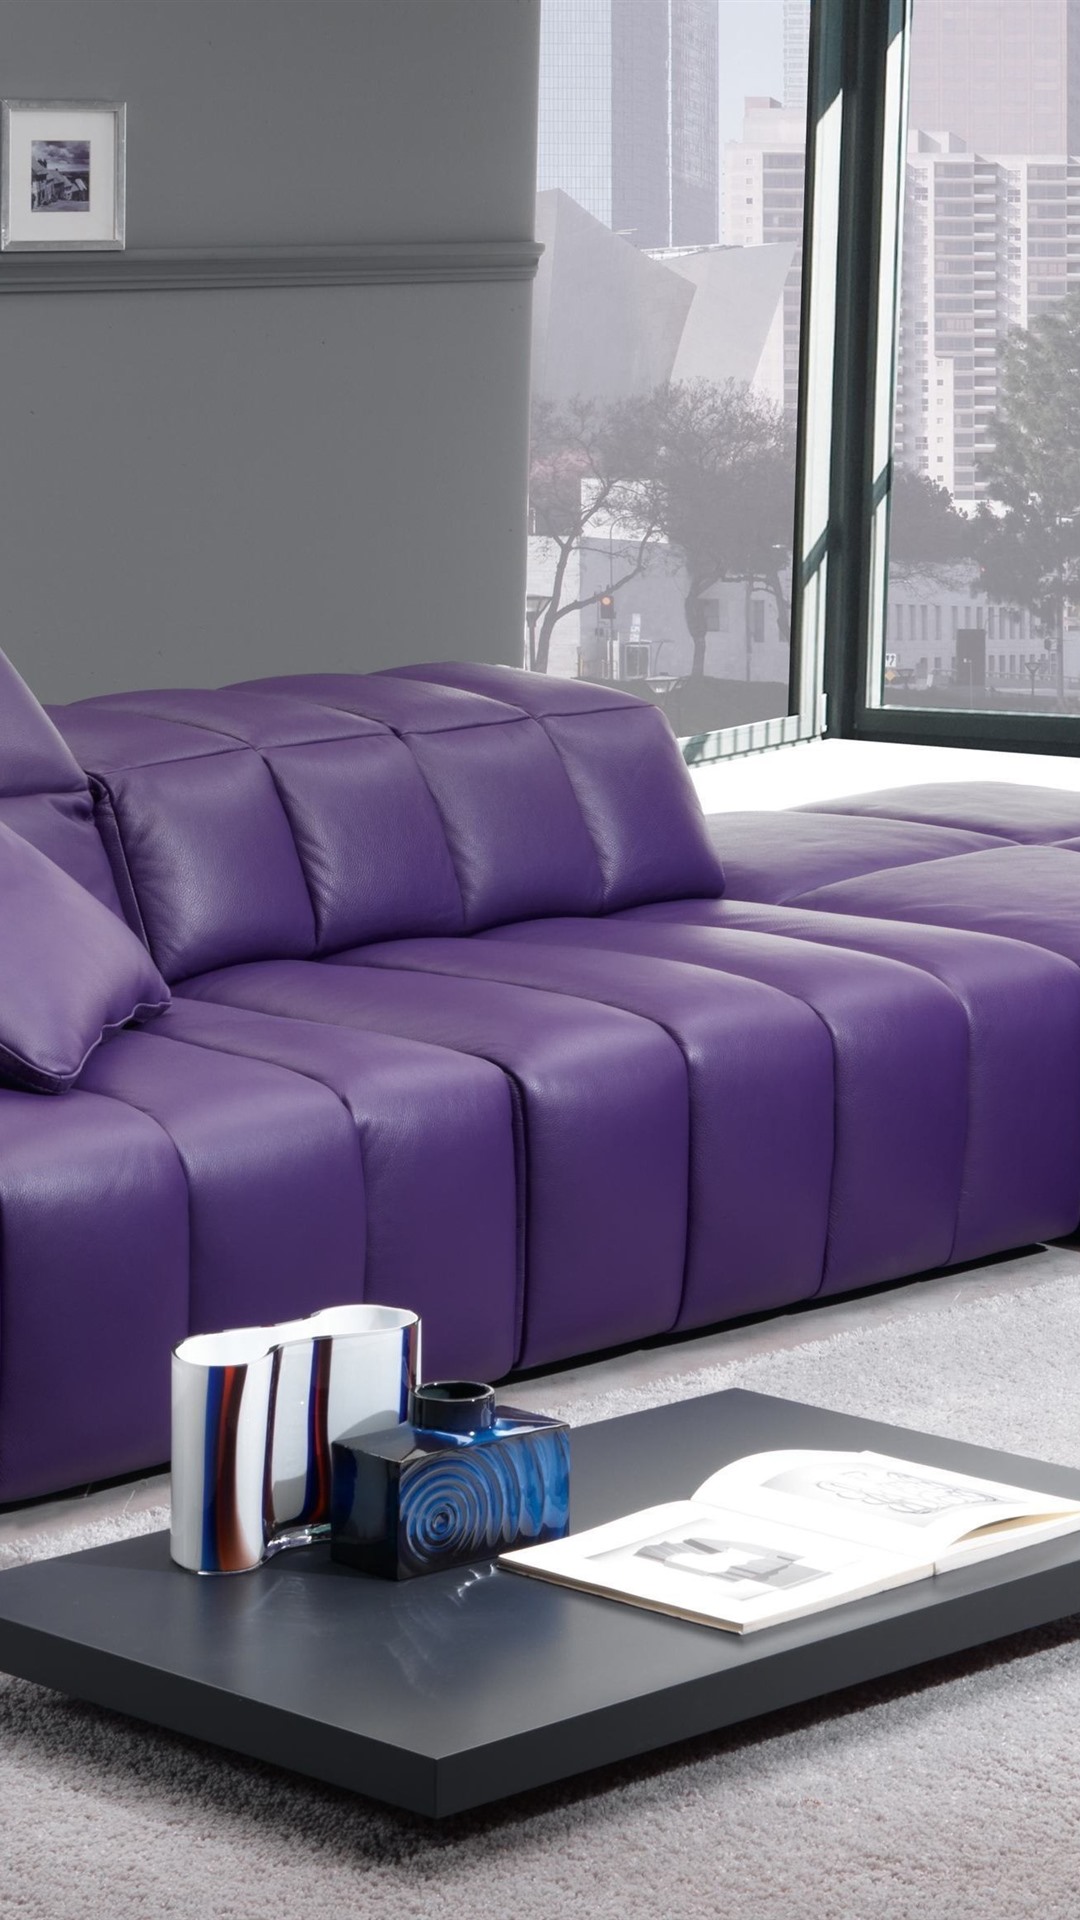 Iphone Wallpaper Living Room, Purple Sofa, Window - Living Room In Purple Colour - HD Wallpaper 